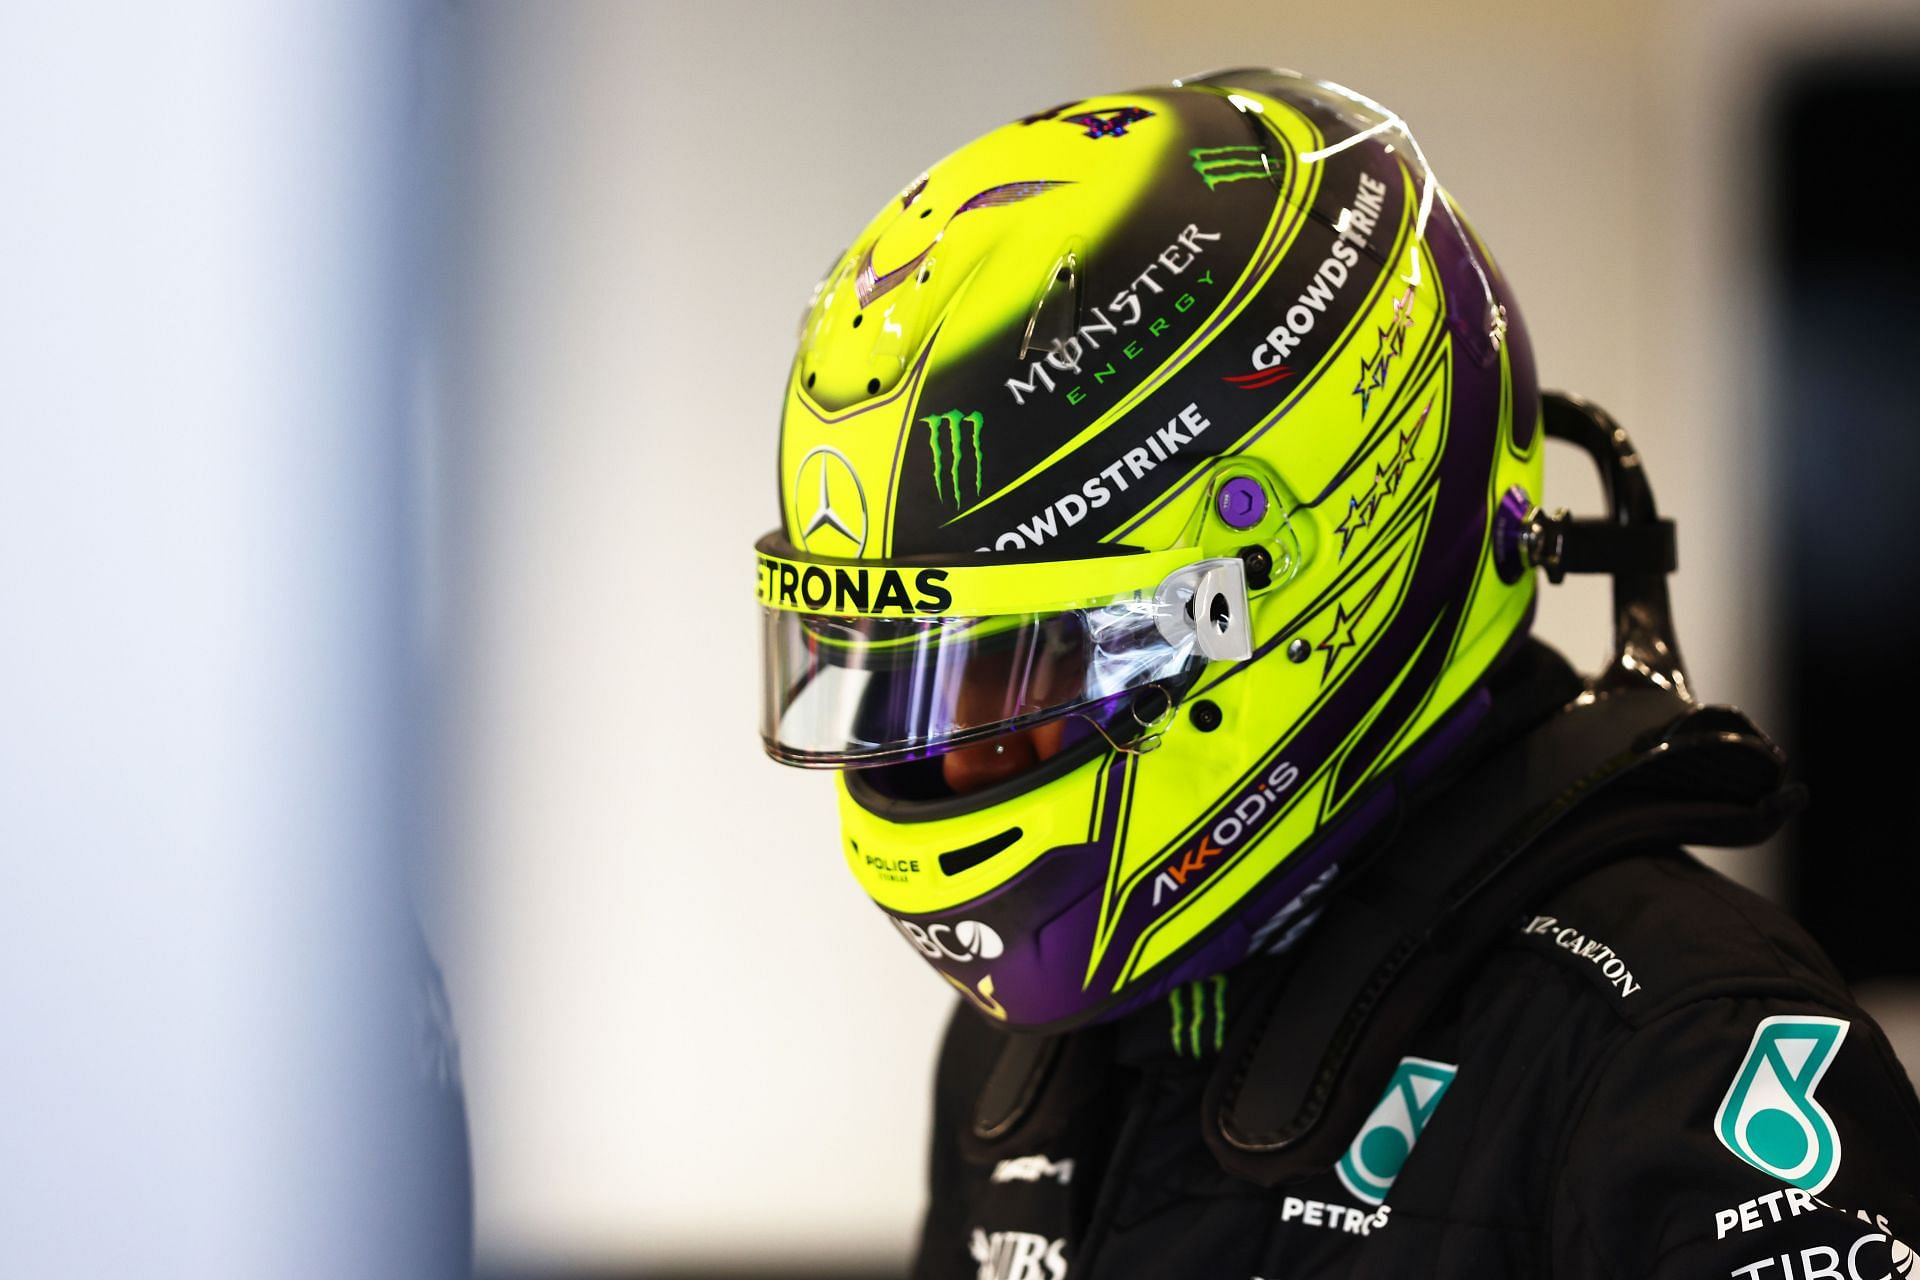 F1 Grand Prix of Saudi Arabia - Final Practice - Lewis Hamilton fails to make it into Q2.